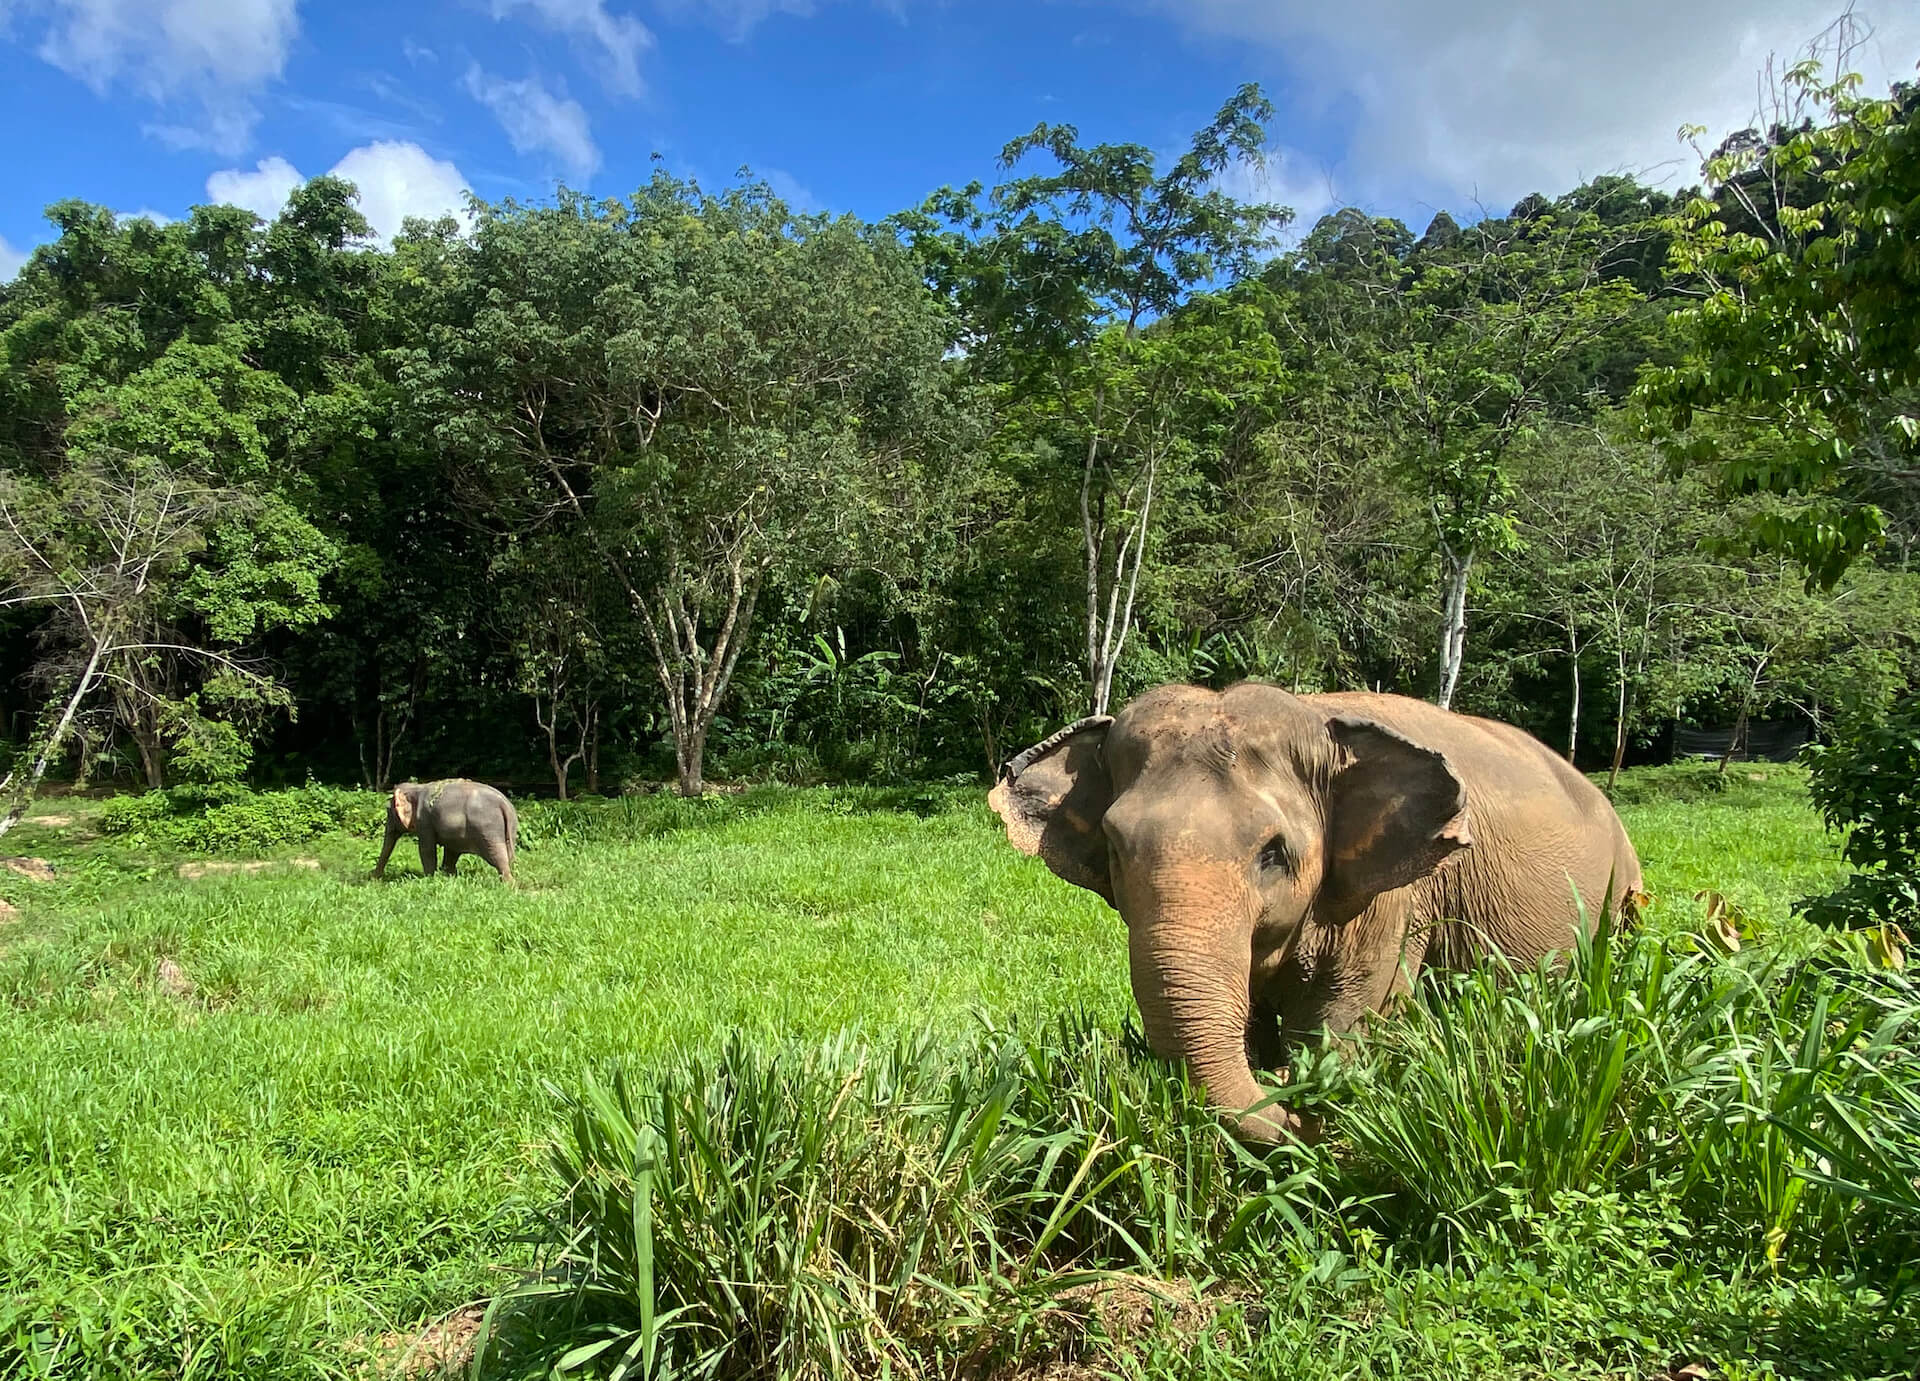 2 elephant in greenry jungle